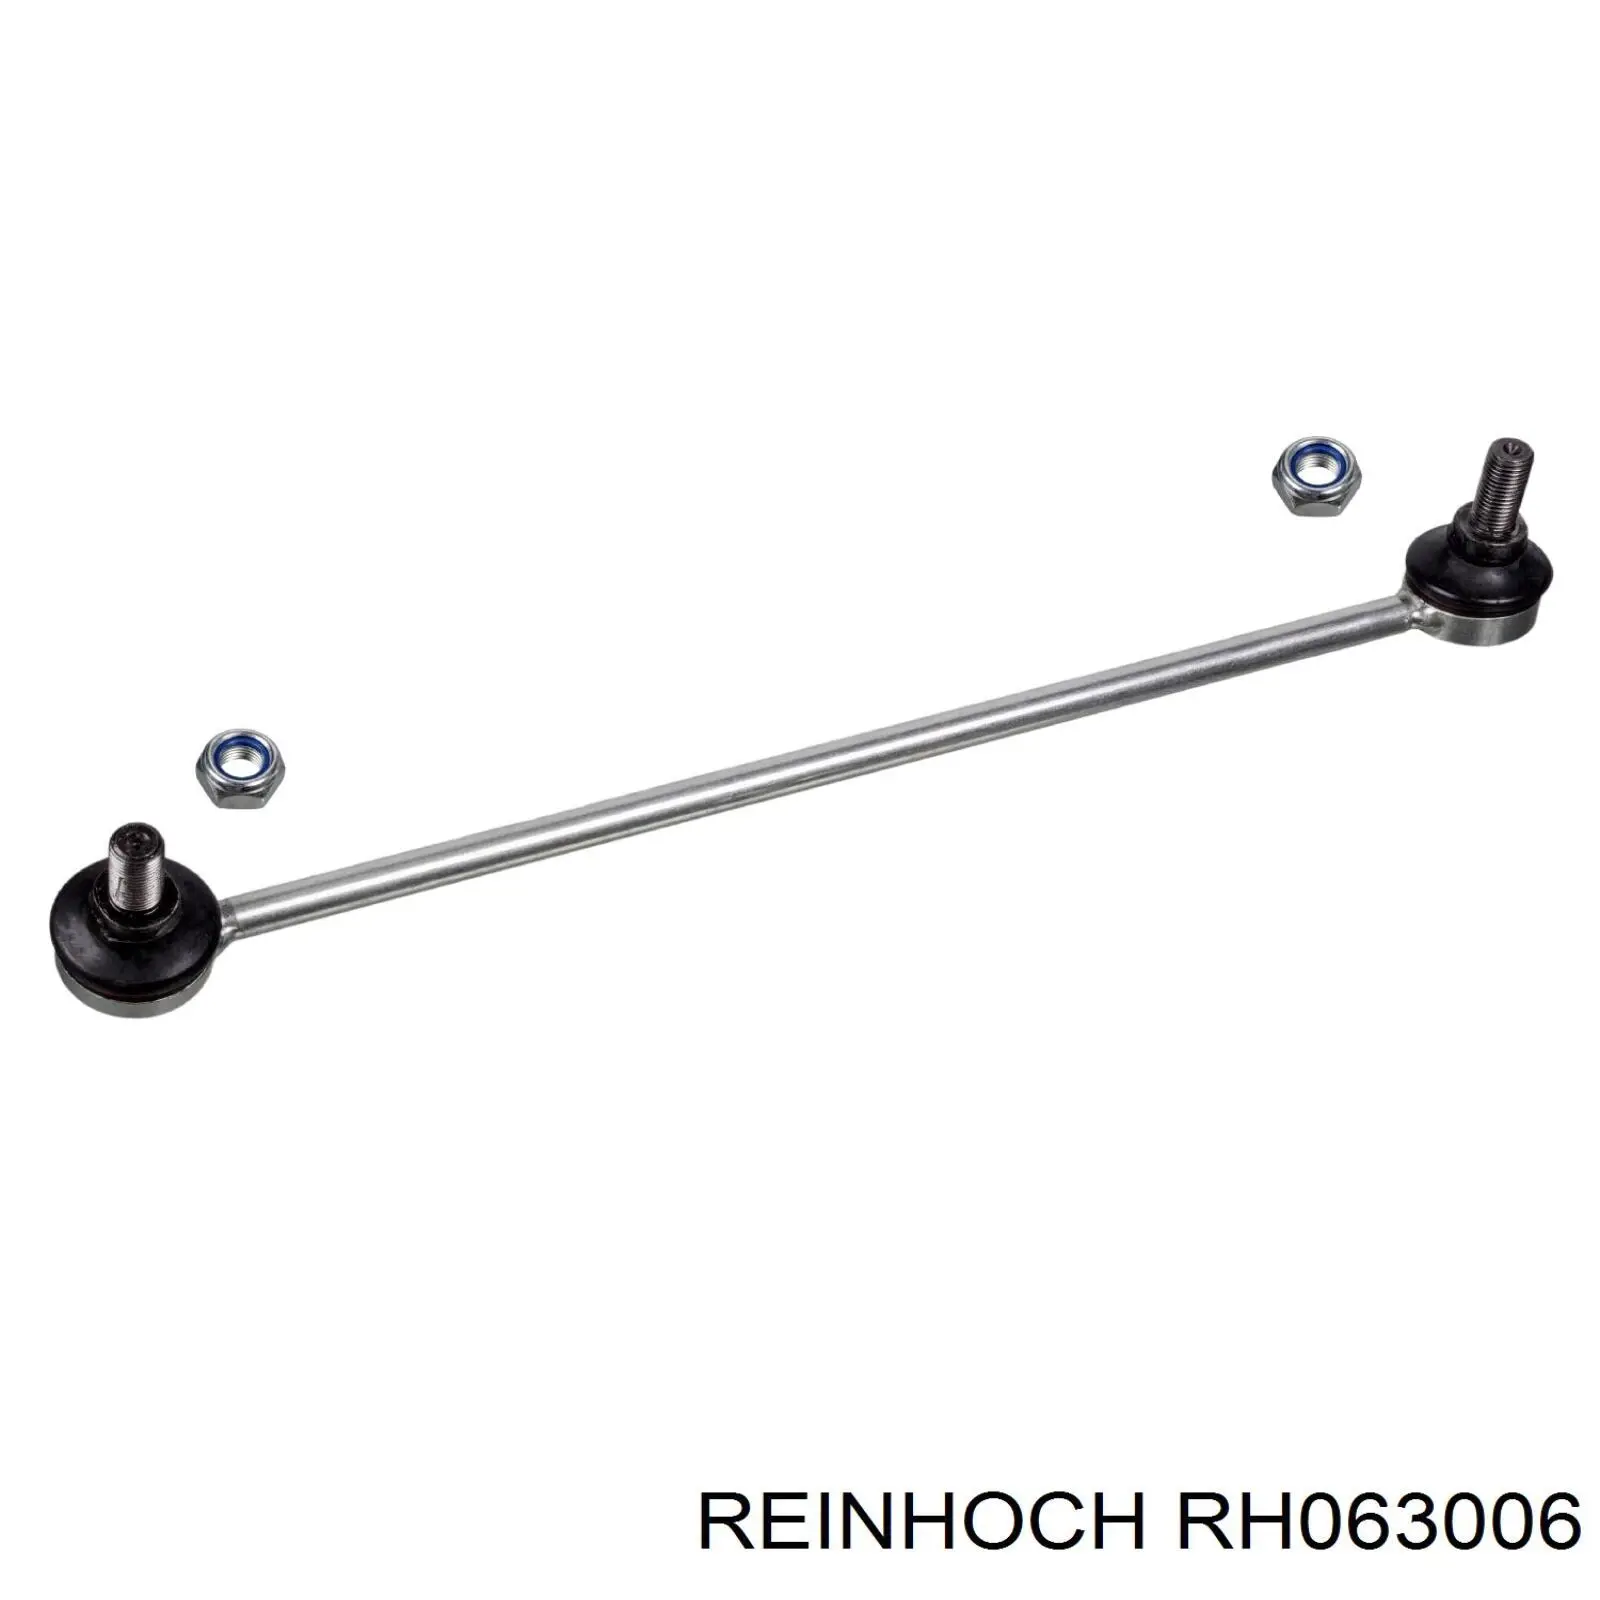 RH063006 Reinhoch barra estabilizadora delantera derecha